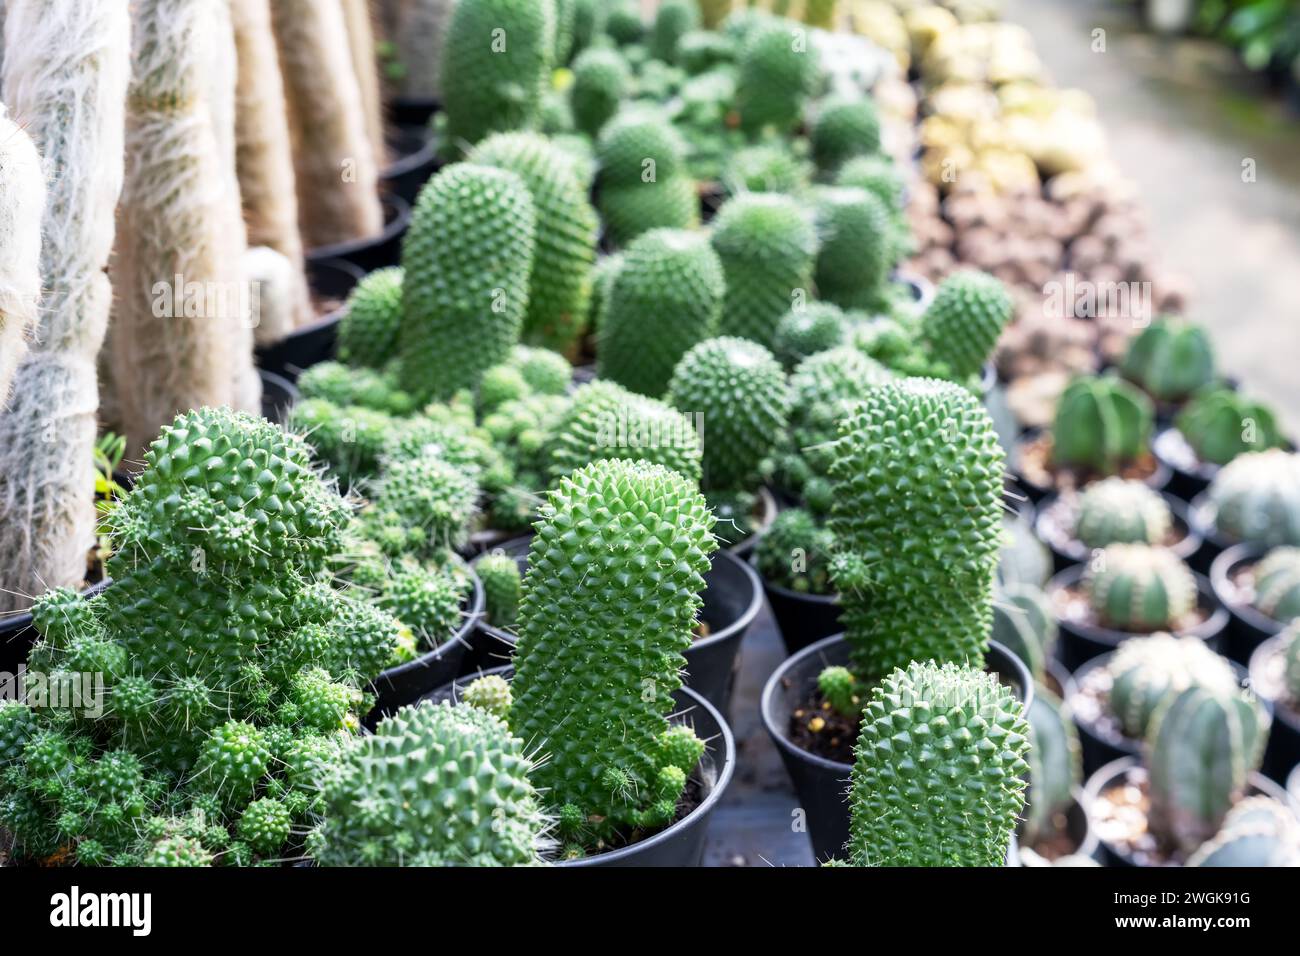 Cactus garden with Mammillaria spinosissima cv. 'Un Pico' and other cactus Stock Photo